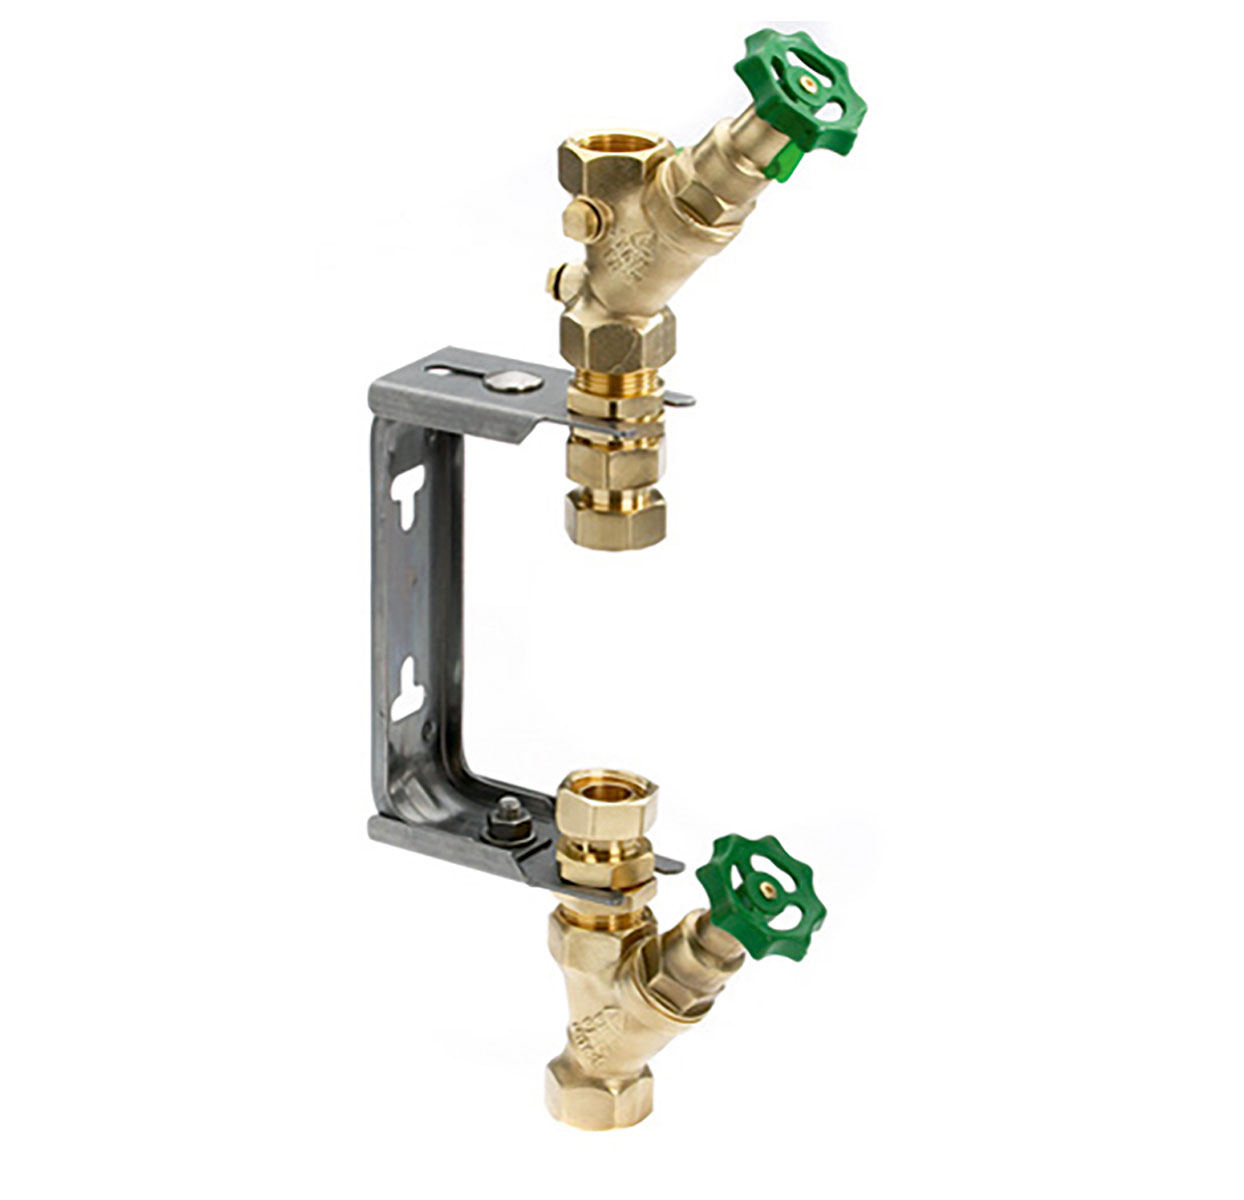 5201320 - Water meter Connection kit bracket adjustable, vertical installation